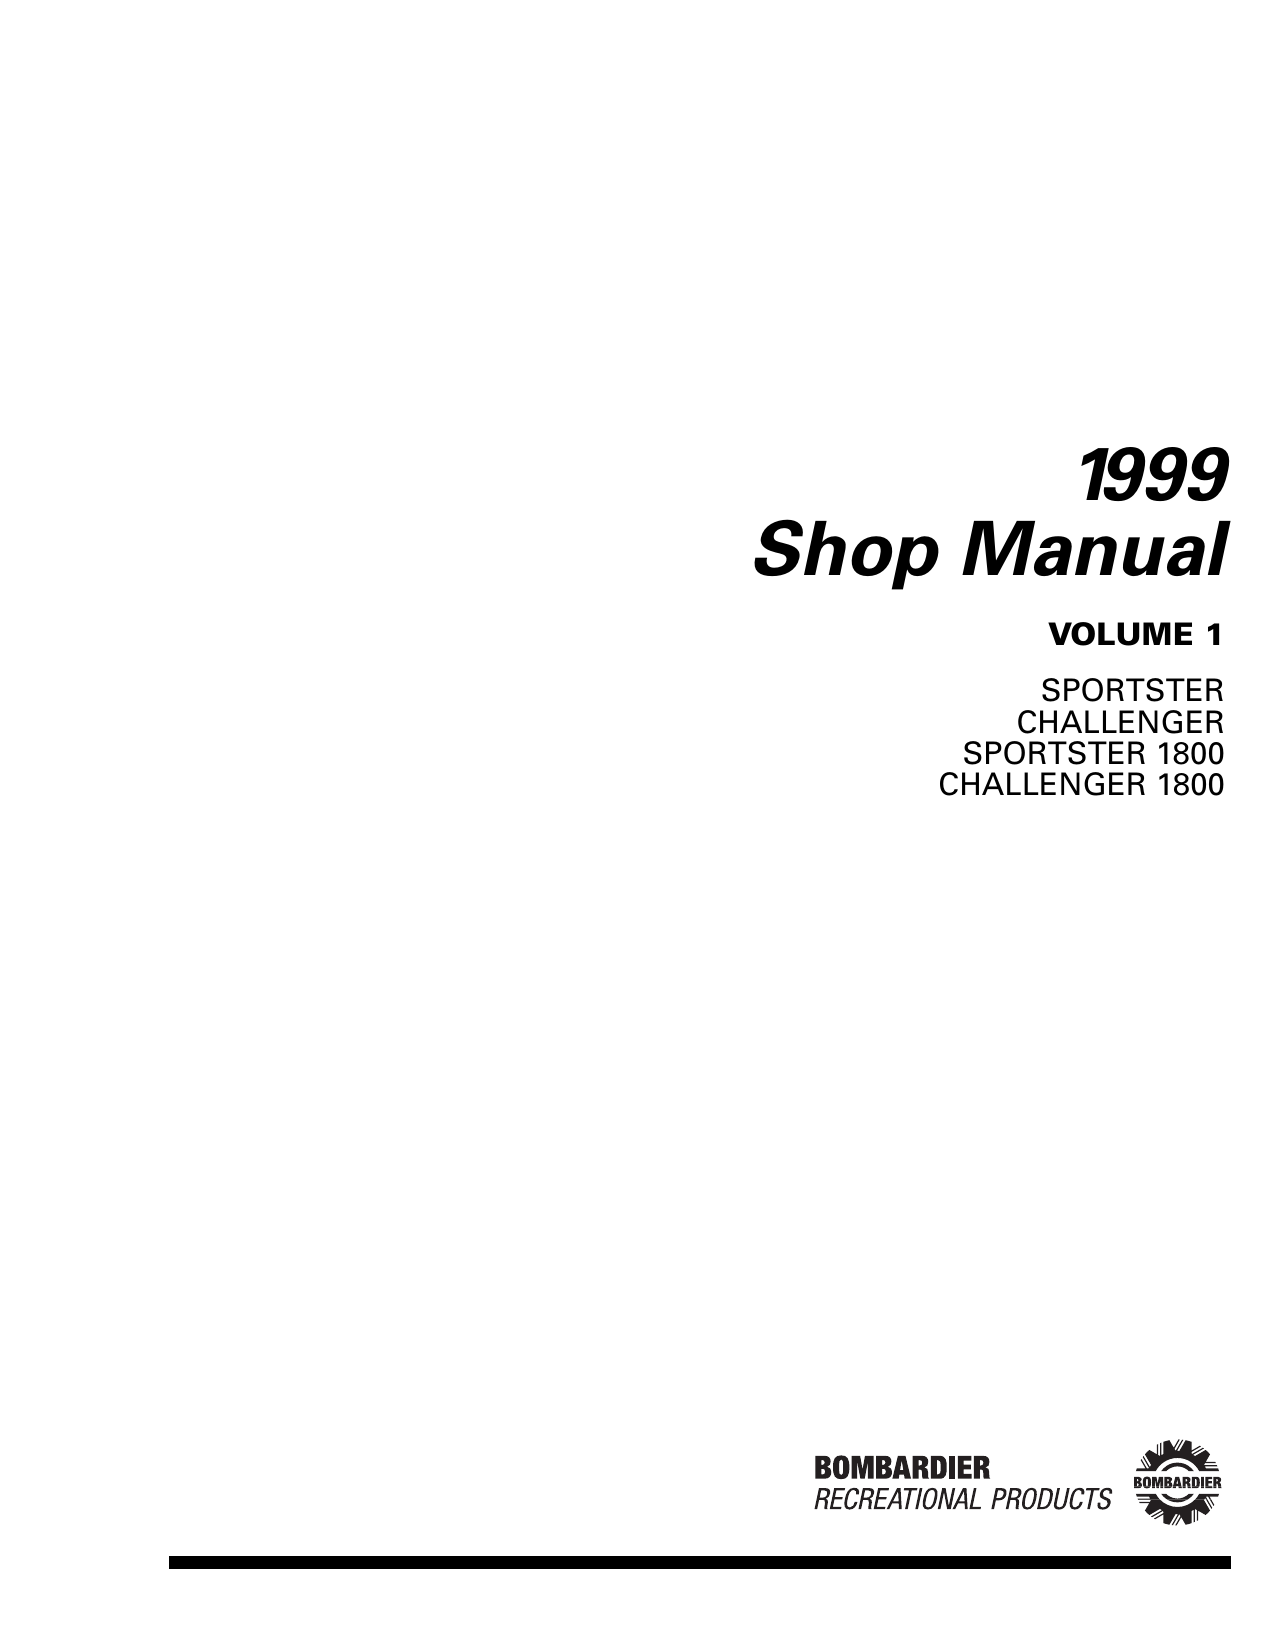 1999 Bombardier Sea-Doo Sportster, Challenger, Speedster shop manual Preview image 2